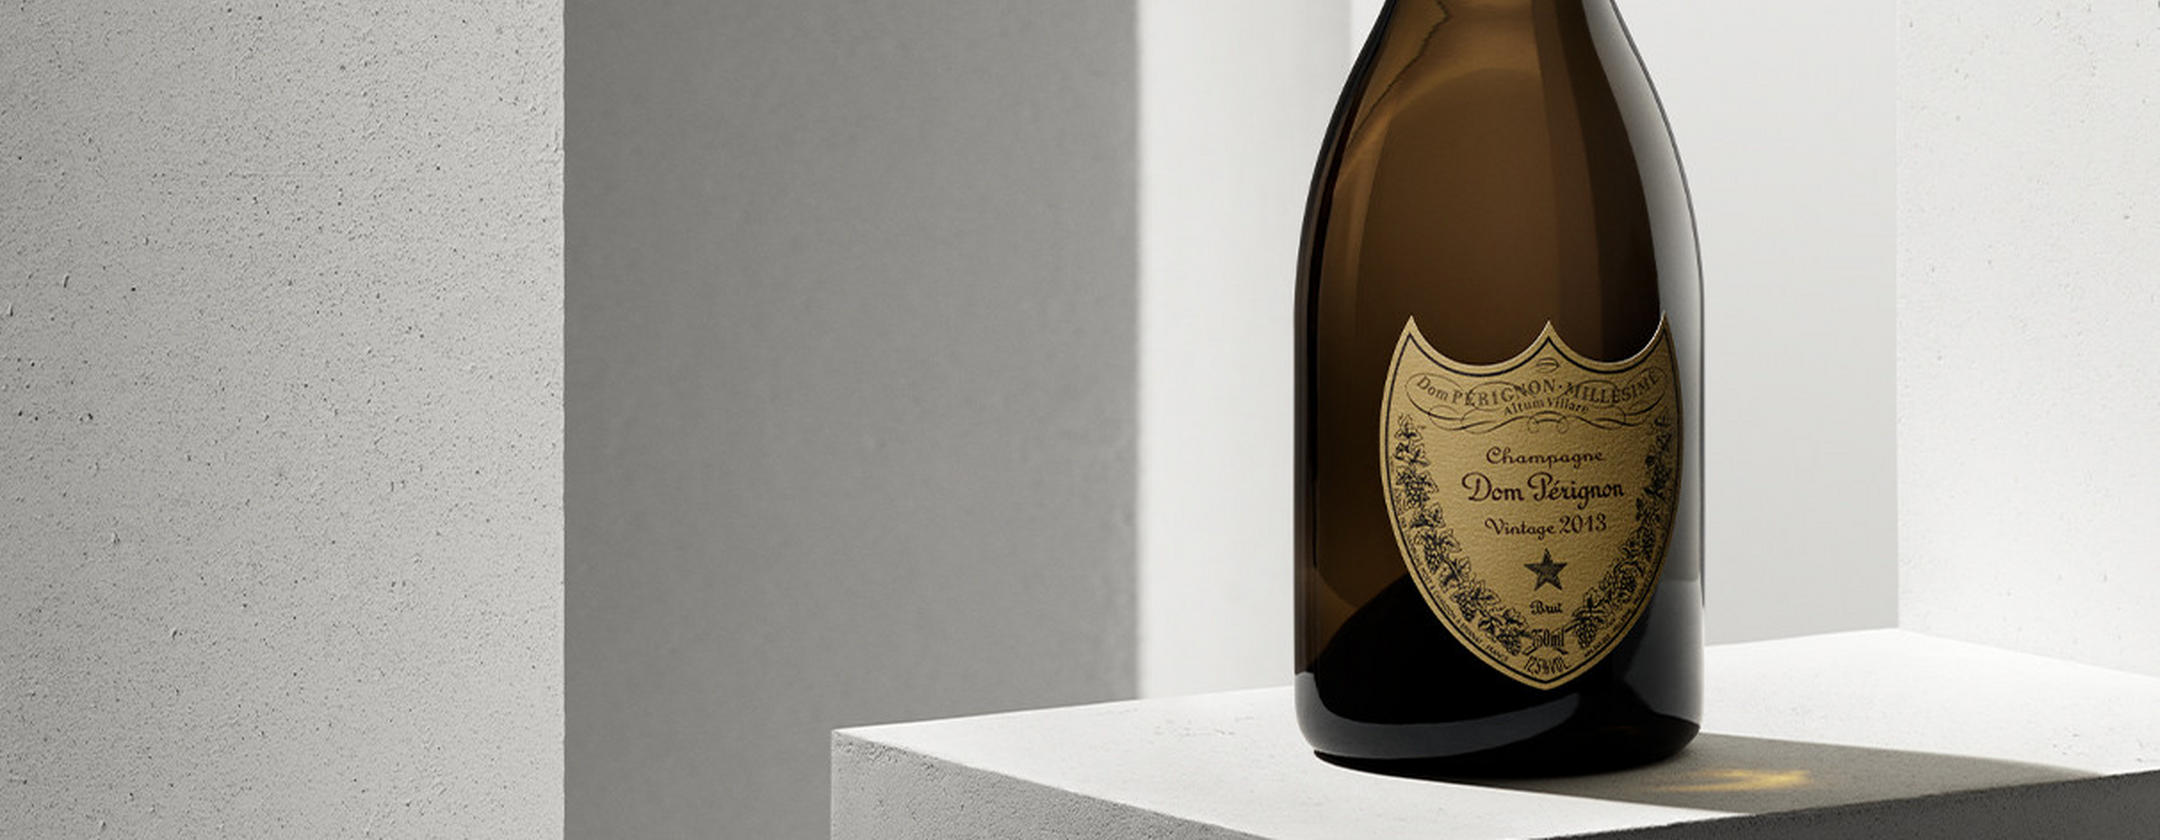 2013 Champagne<br> Dom Pérignon, Brut _ Delicate, floral and balanced